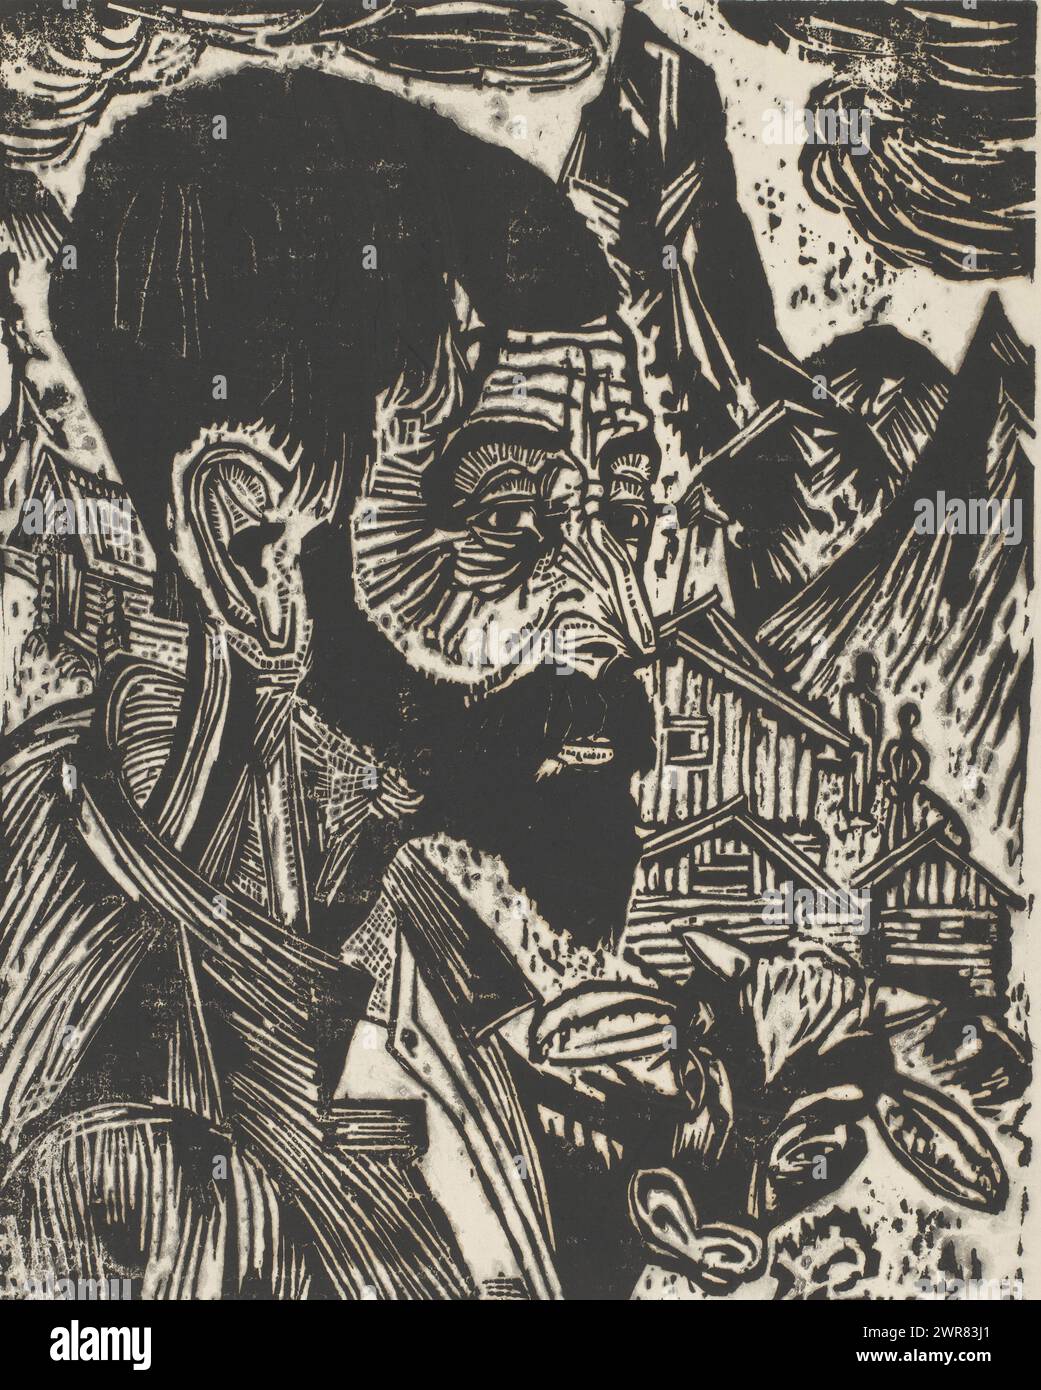 Sennkopf (Martin Schmied) (original title), print maker: Ernst Ludwig Kirchner, (signed by artist), Germany, 1917, paper, height 590 mm × width 458 mm, print Stock Photo